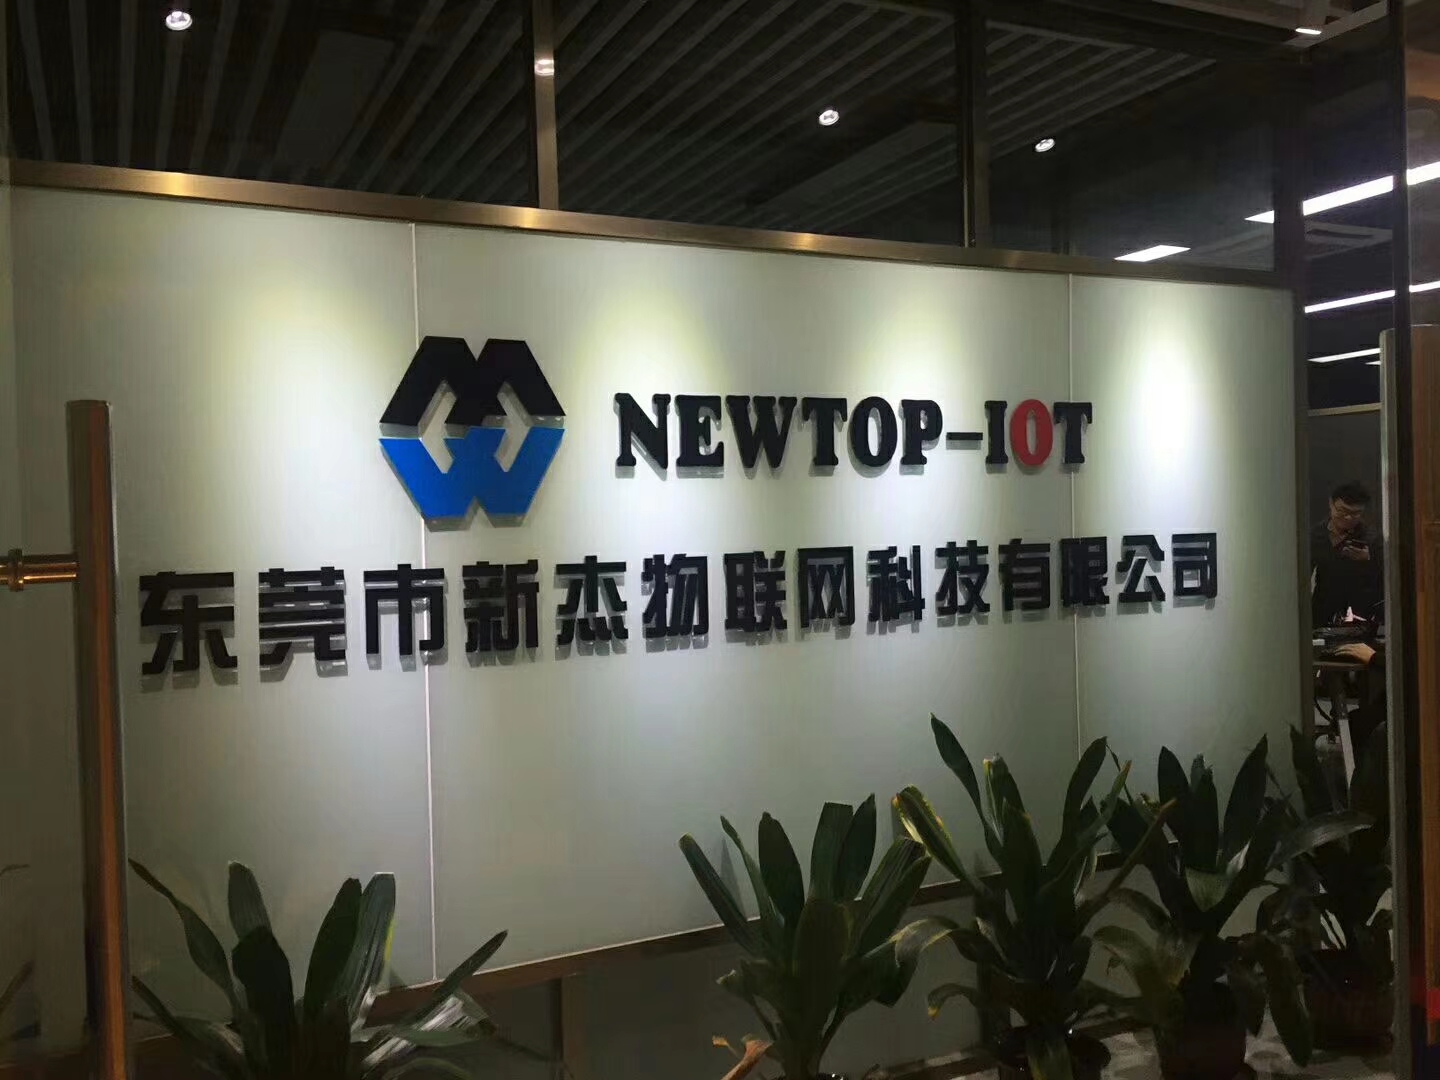 In 2018, Dongguan NewTop-IoT Technology Co., Ltd was established